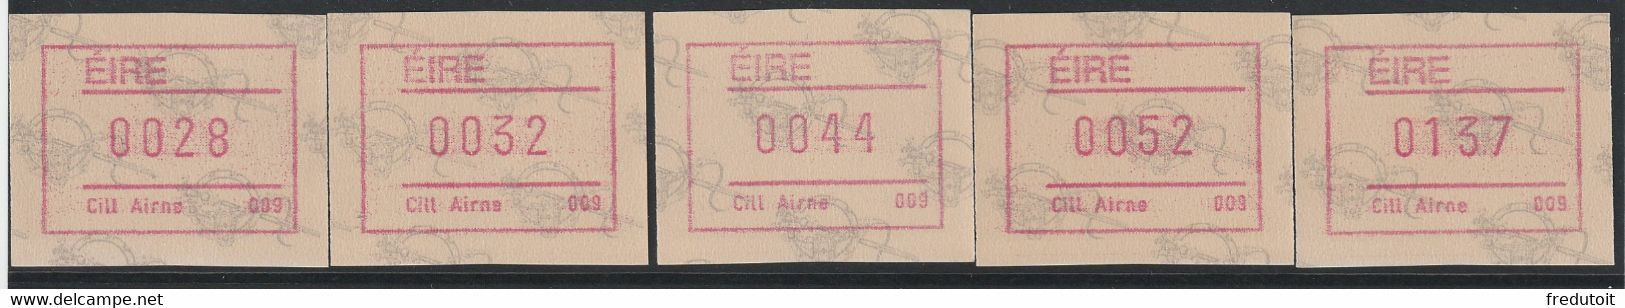 IRLANDE - Timbres Distributeurs / FRAMA  ATM - N°4** (1992) Cill Airne 009 - Viñetas De Franqueo (Frama)